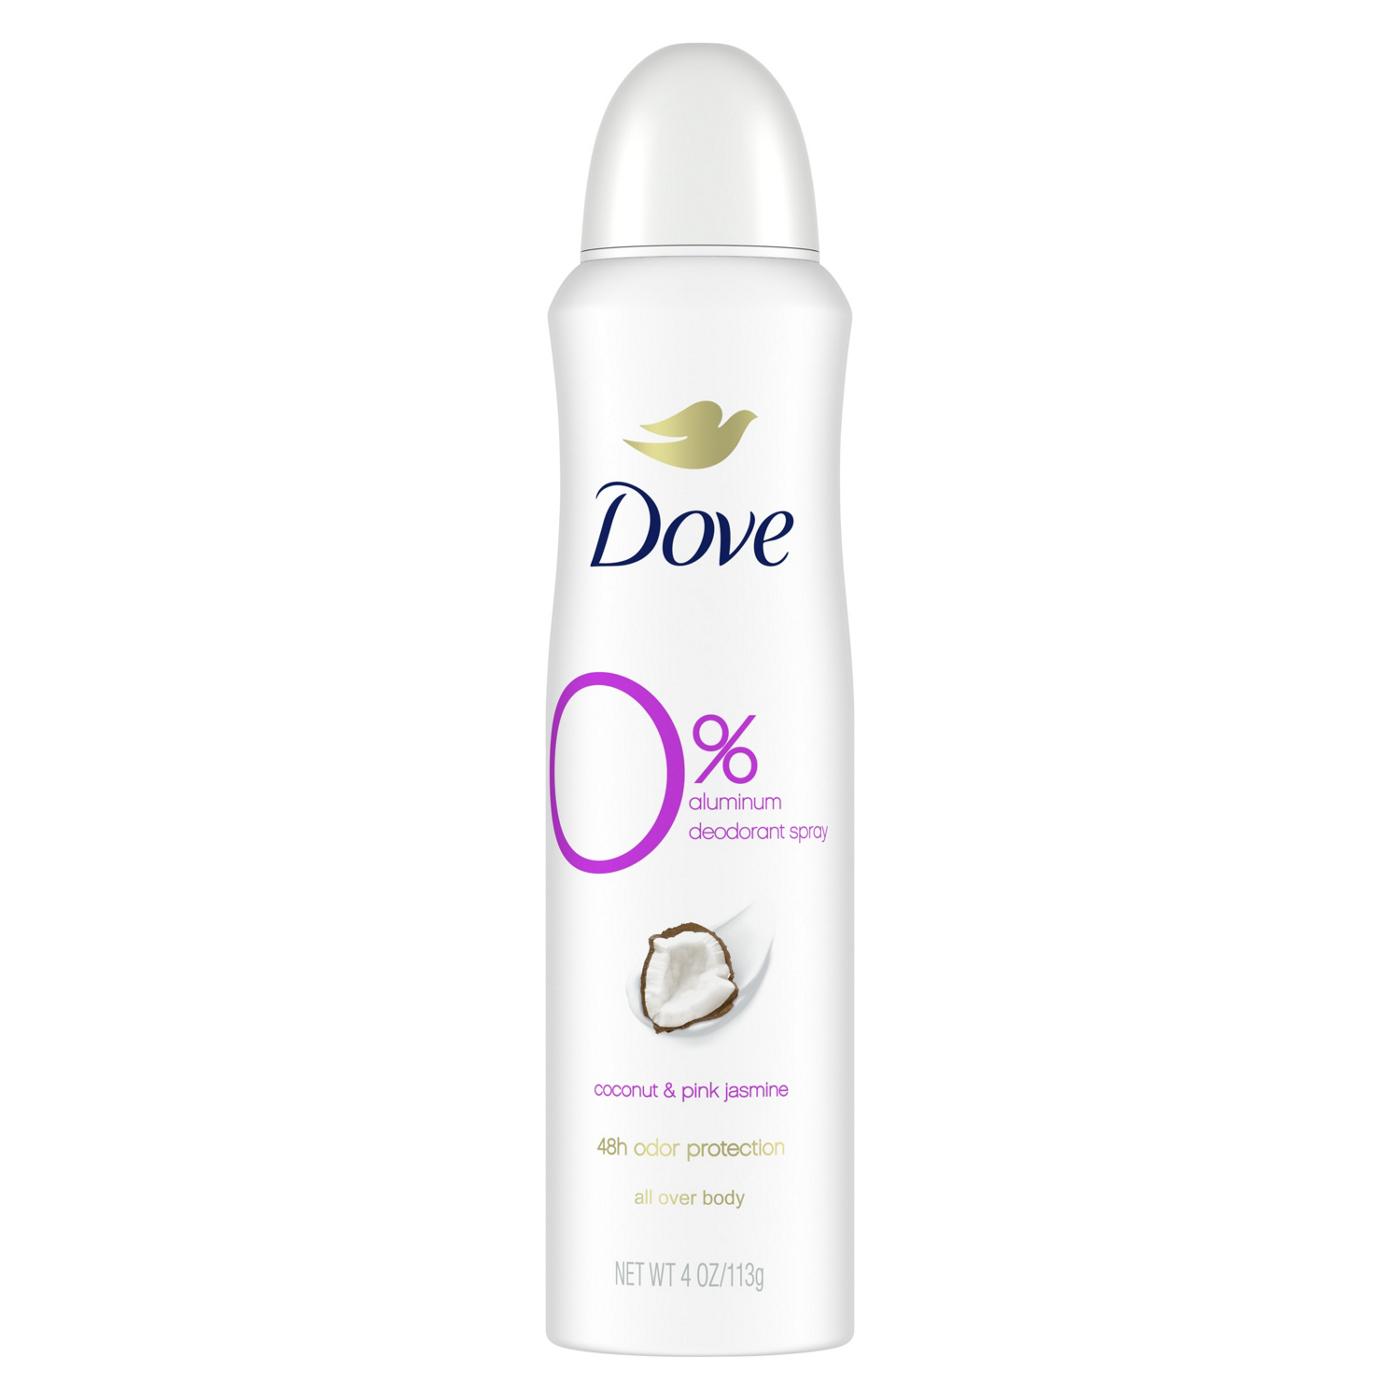 Dove Aluminum Free Deodorant Spray - Coconut & Pink Jasmine; image 1 of 3